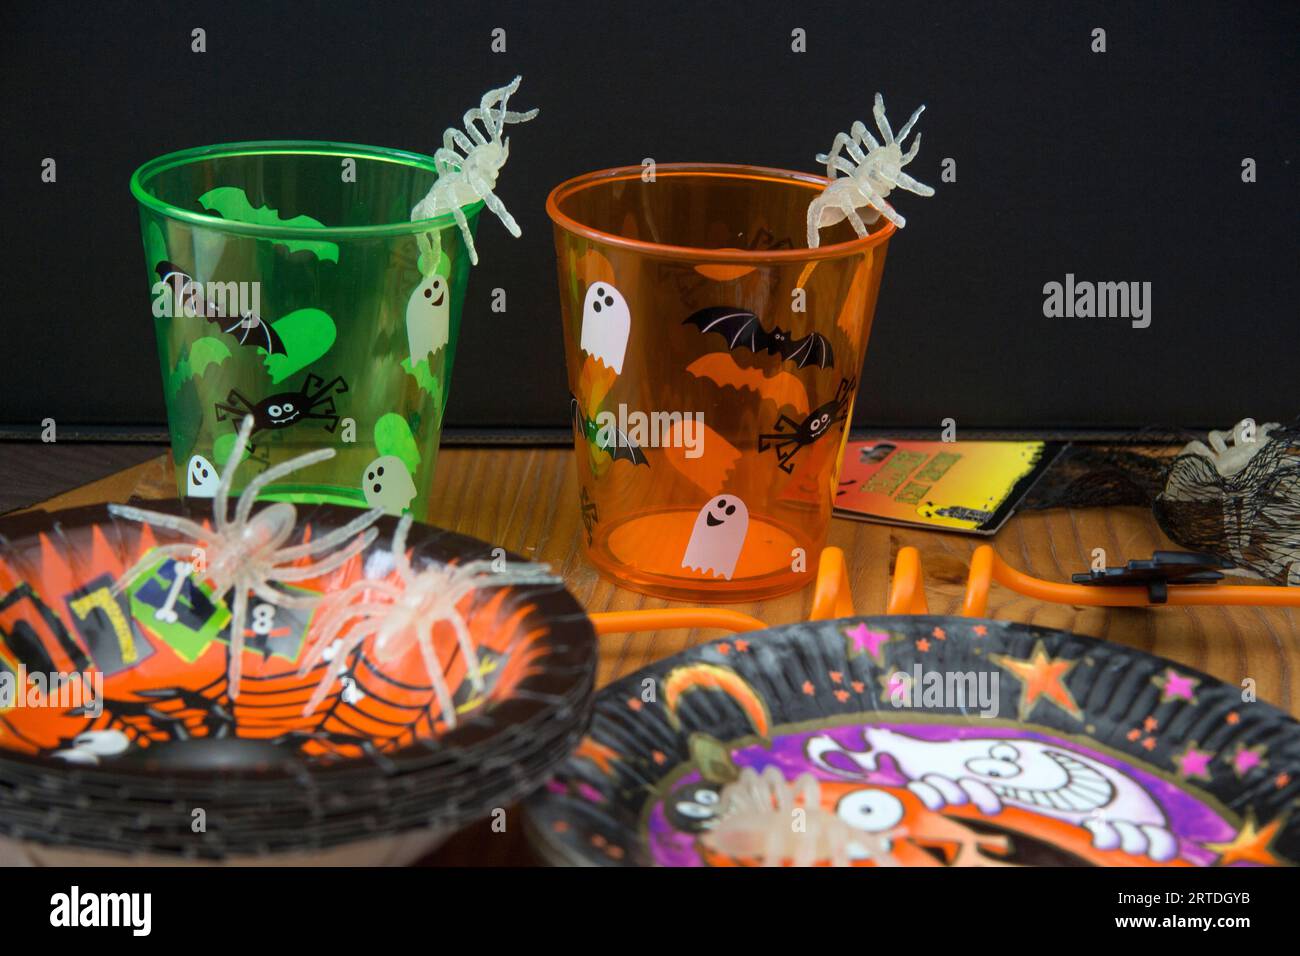 Gruselige Kreaturen beim Halloween-Party-Thema Stockfoto